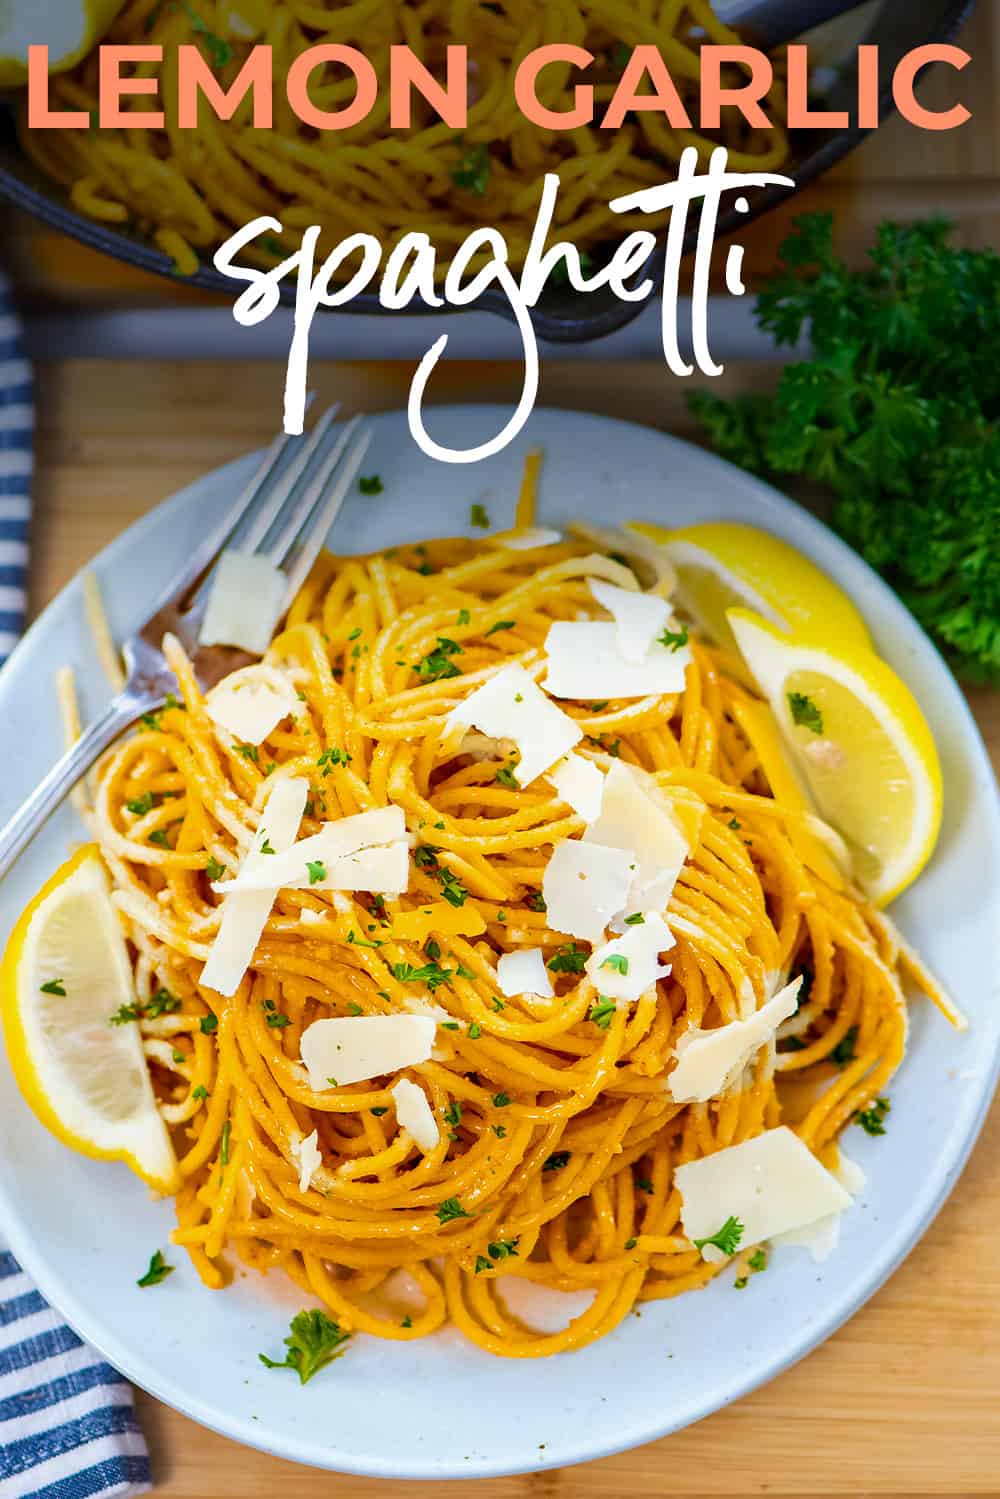 Overhead view of lemon garlic spaghetti on plate.